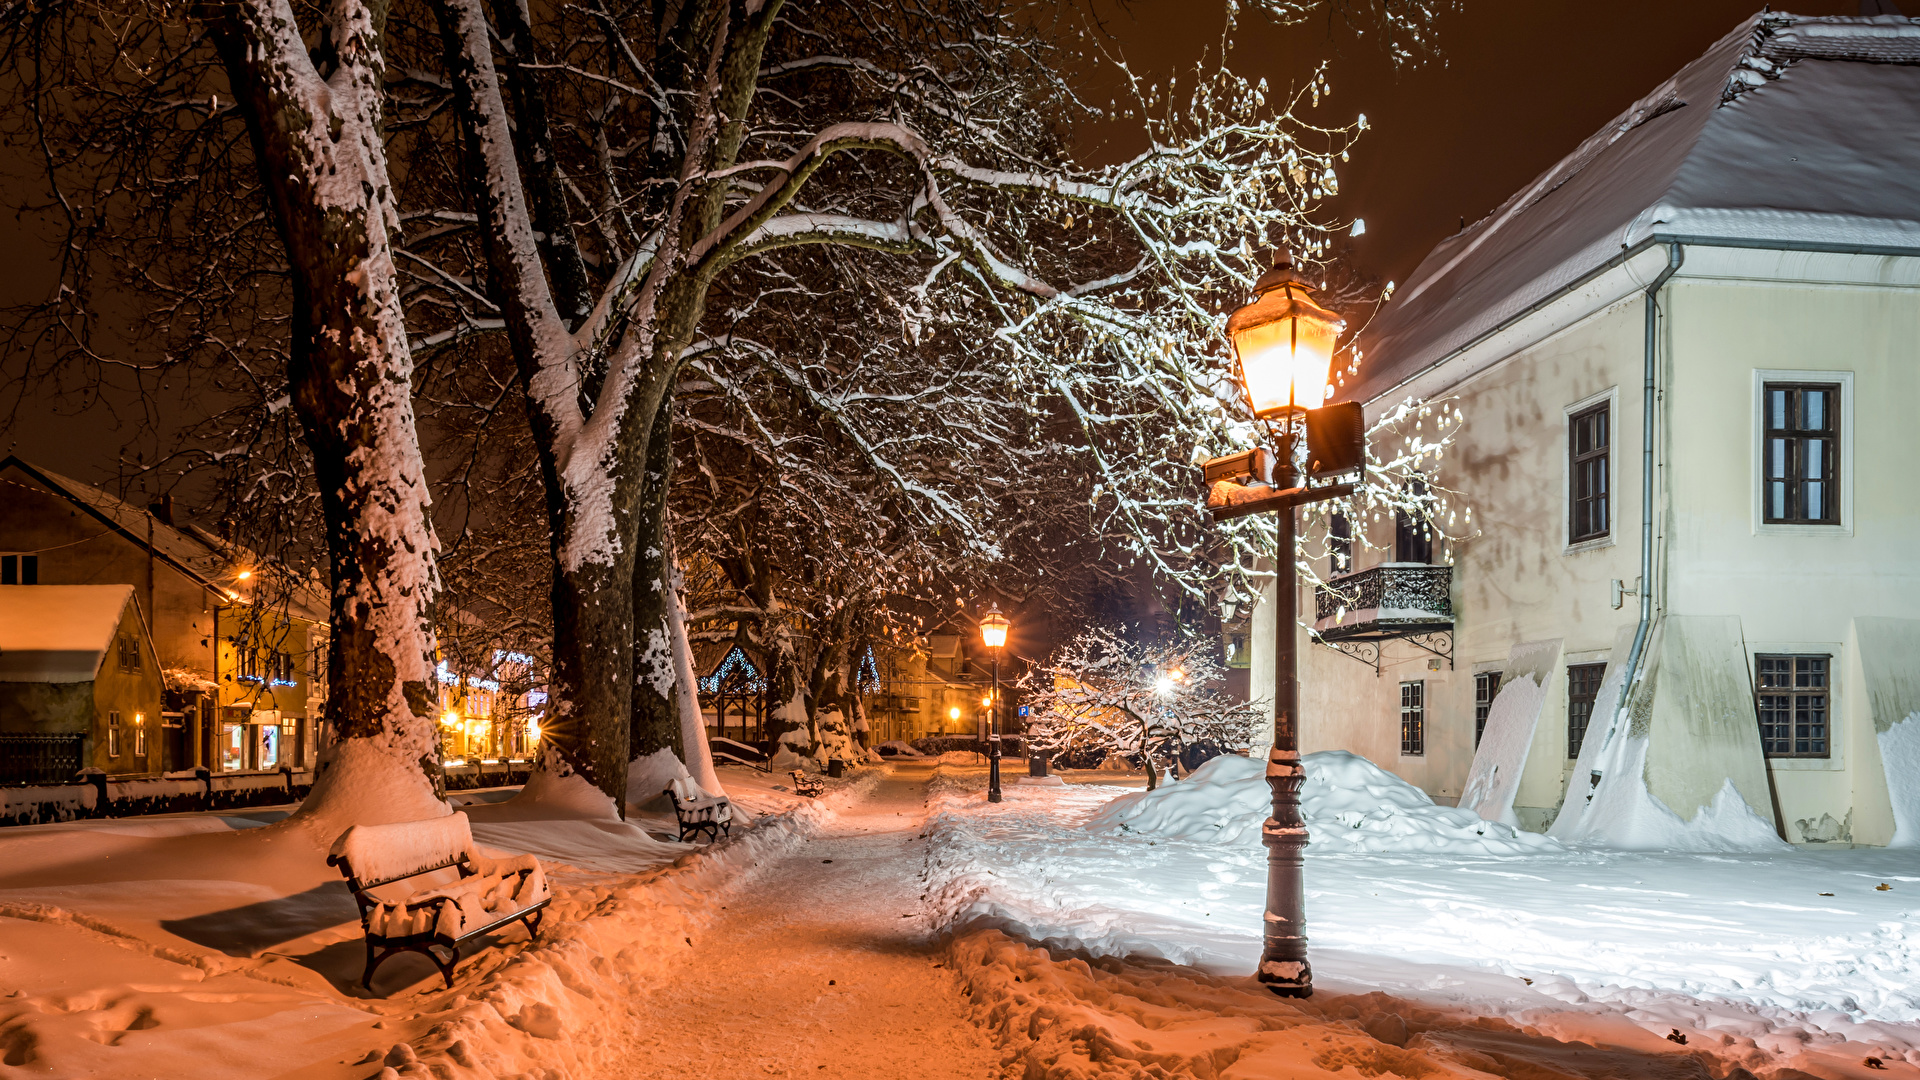 Image City of Zagreb Croatia Samobor Winter Snow Street 1920x1080